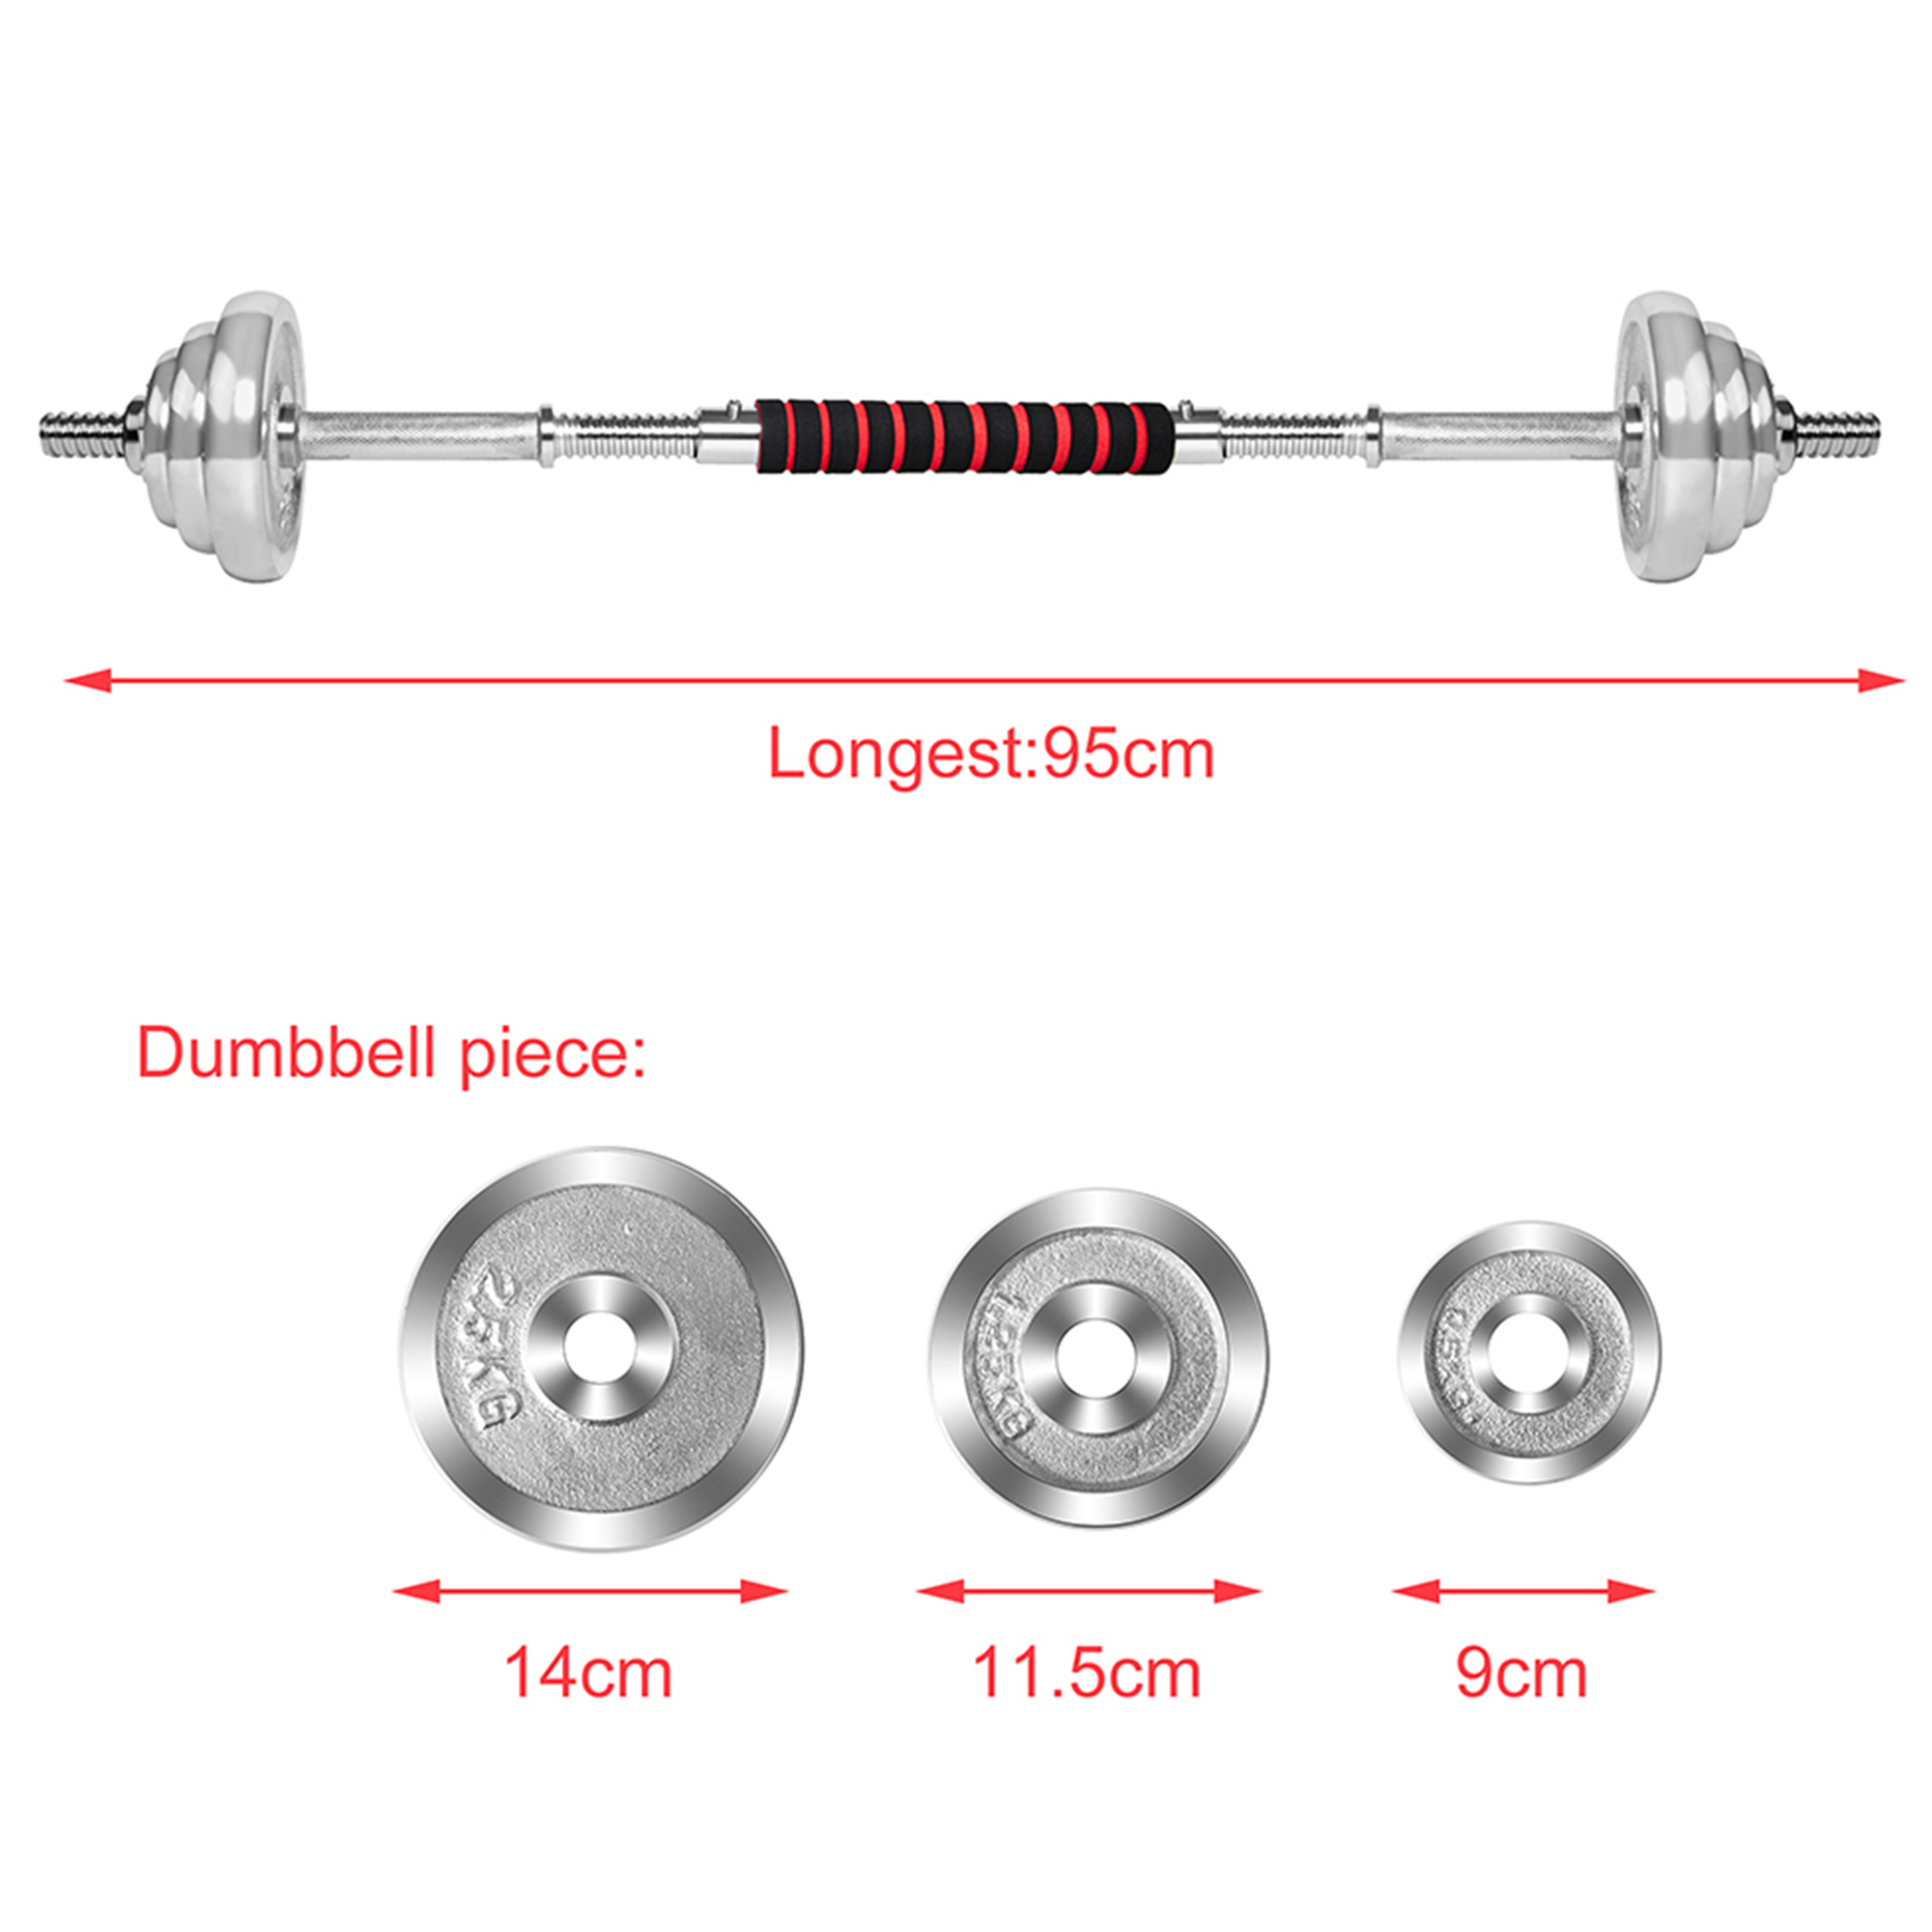 SAYFUT 66LB Dumbbell Weight Set Detachable Fitness Dumbbells Barbells Adjustable for Gym Household Exercise, Silver - image 4 of 6